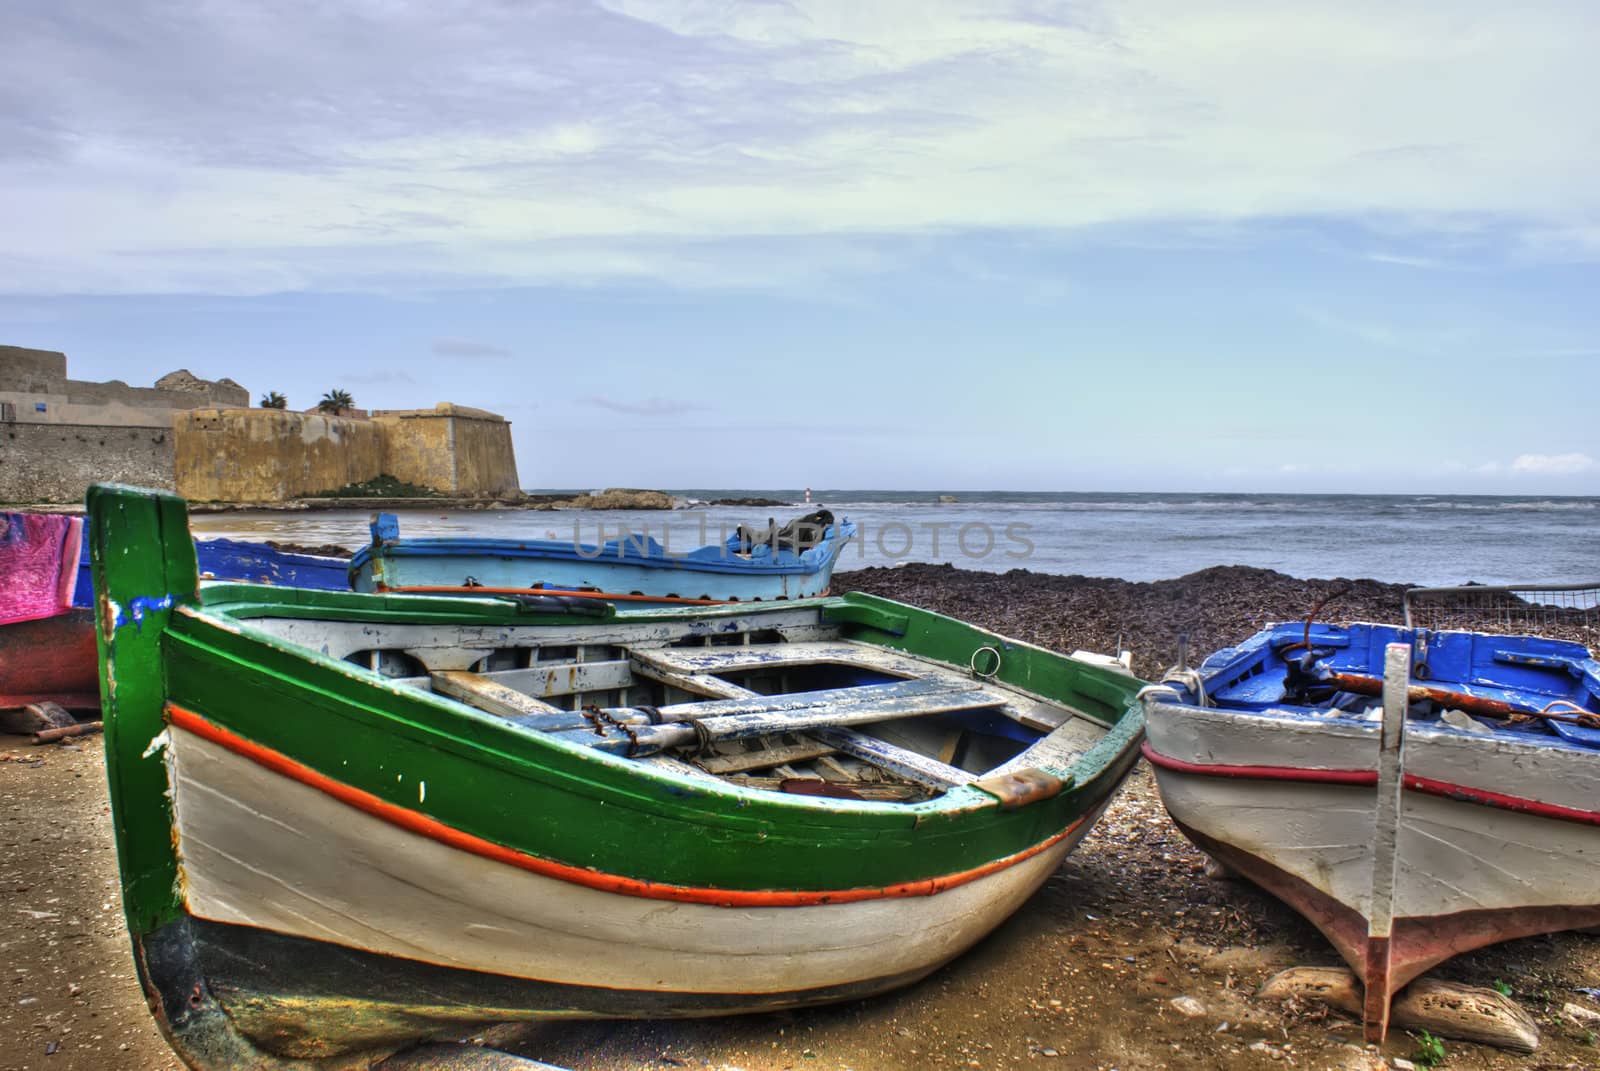 Boats in the marina of trapani. Sicily by gandolfocannatella